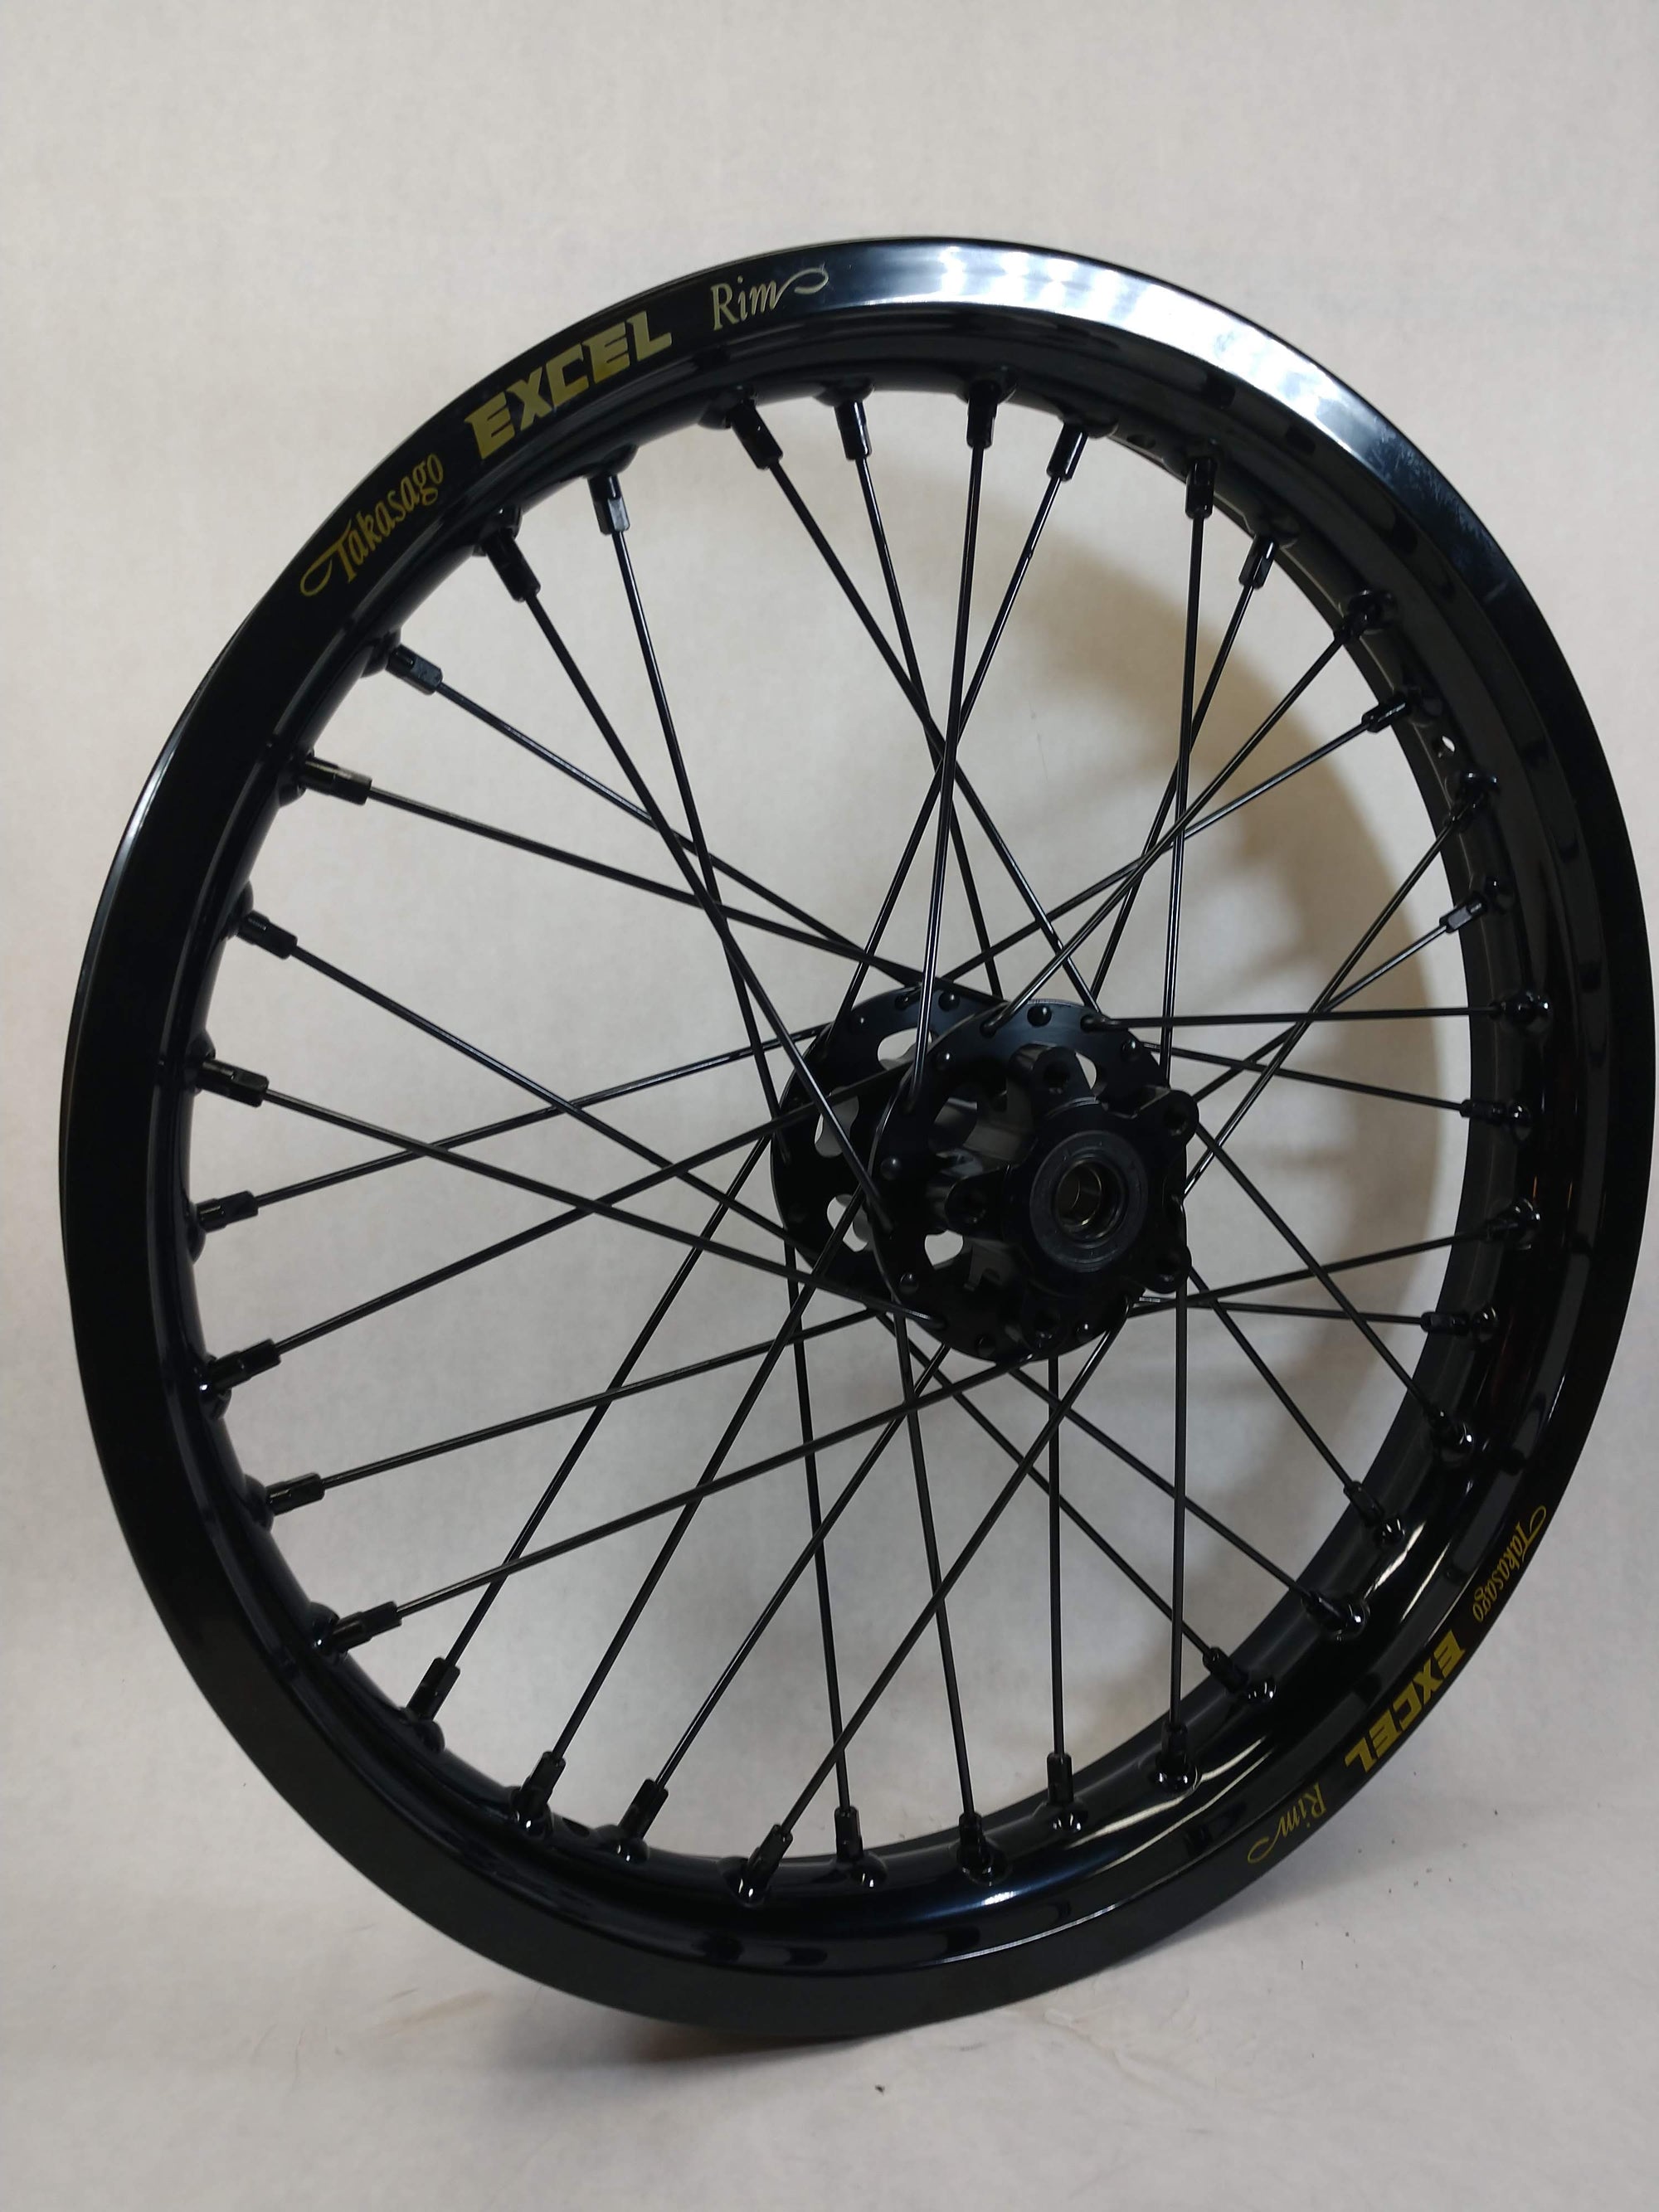 Woody's custom rear wheel for Sur Ron e-bike. Featuring black Excel rim w/ black spokes/nipples and hub